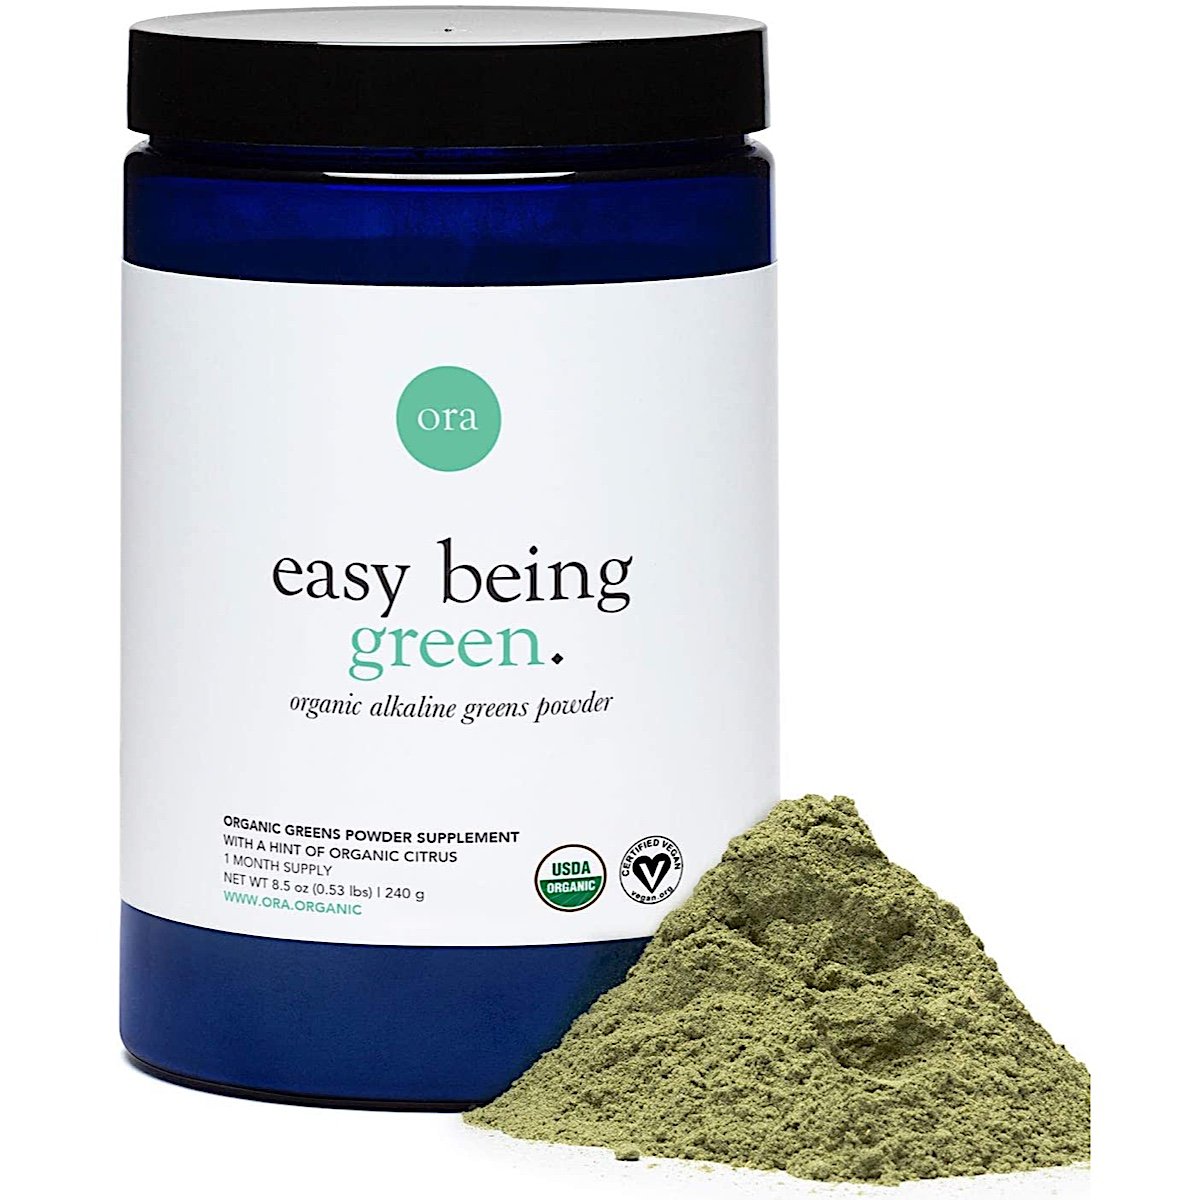 Ora Organic Easy Being Green Organic Alkaline Greens Powder Citrus - 8.25 oz